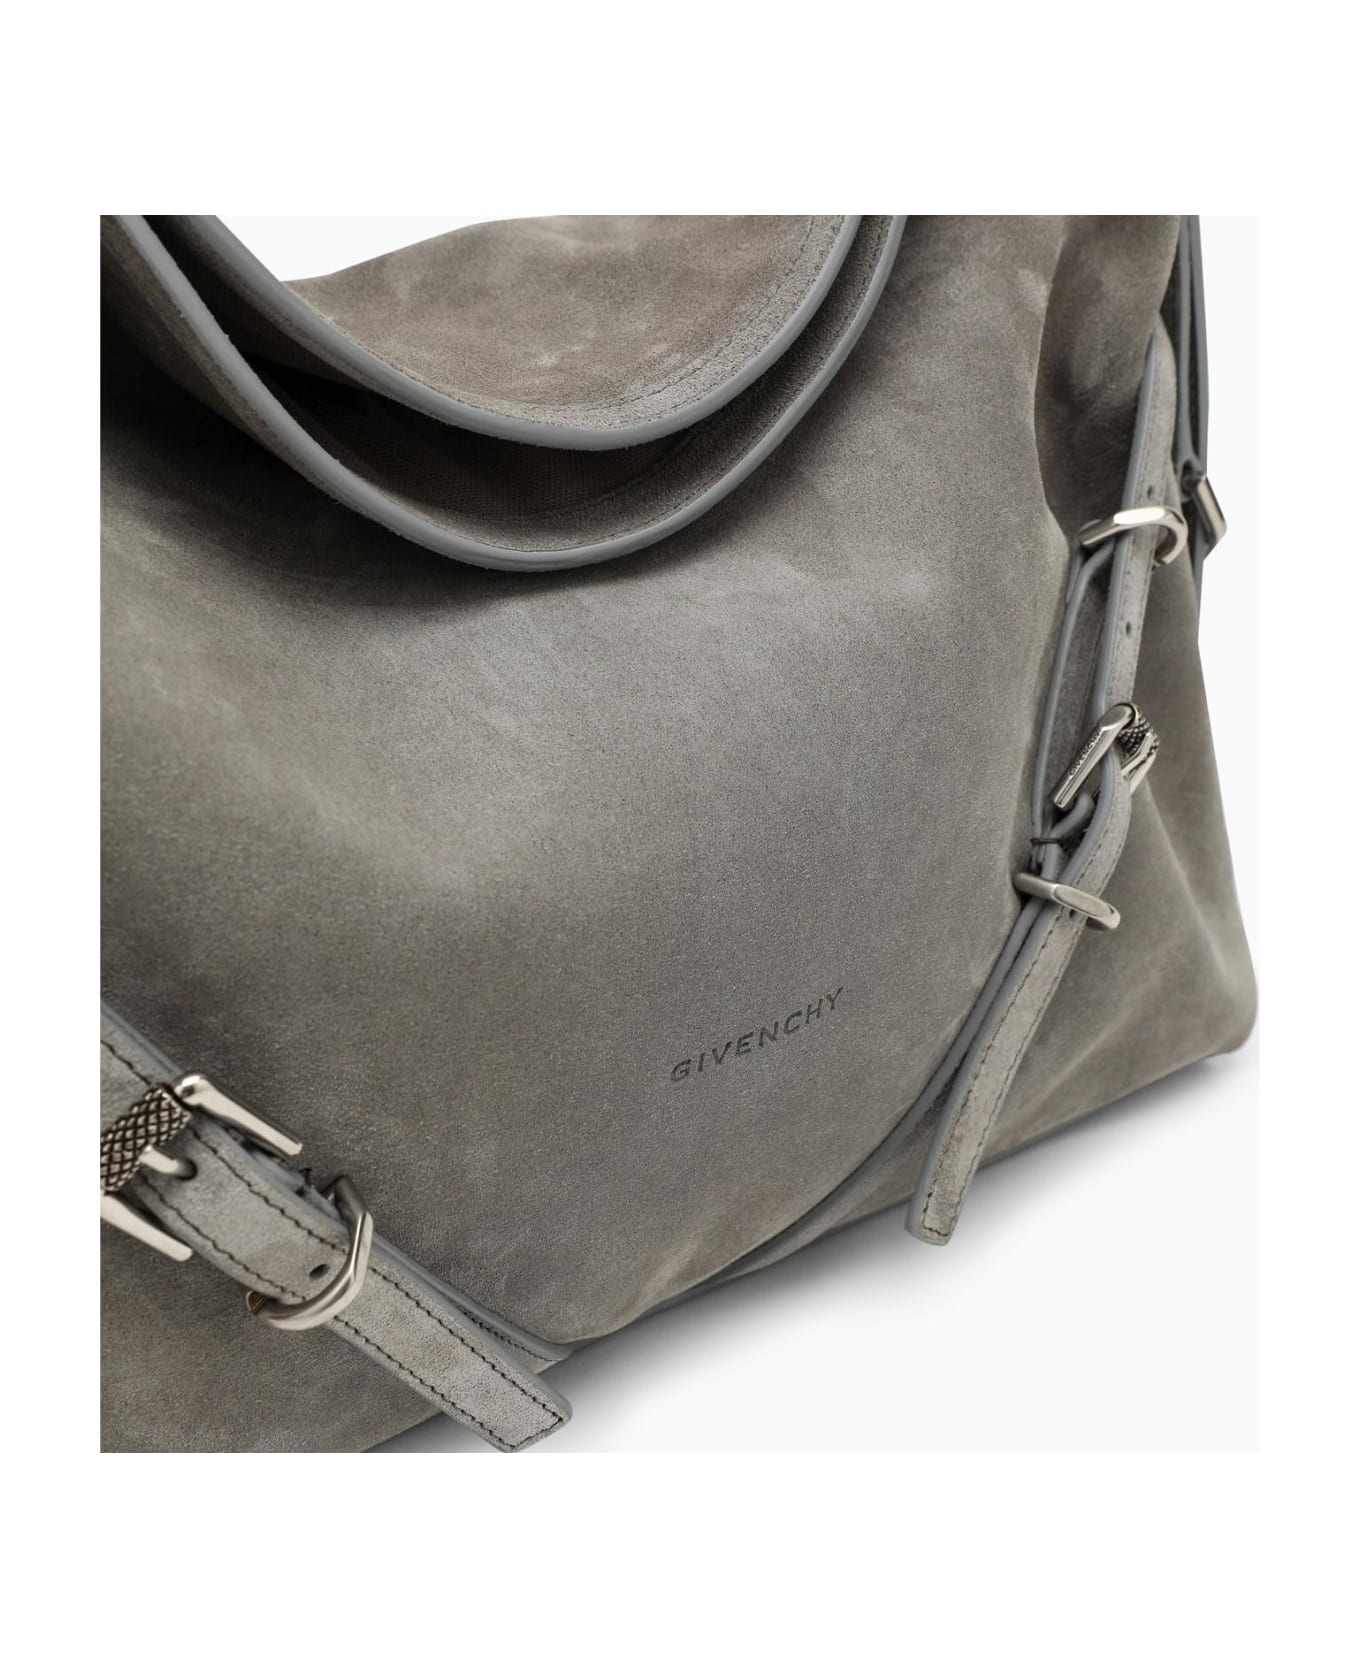 Givenchy Voyou Medium Grey Suede Bag - Grey トートバッグ